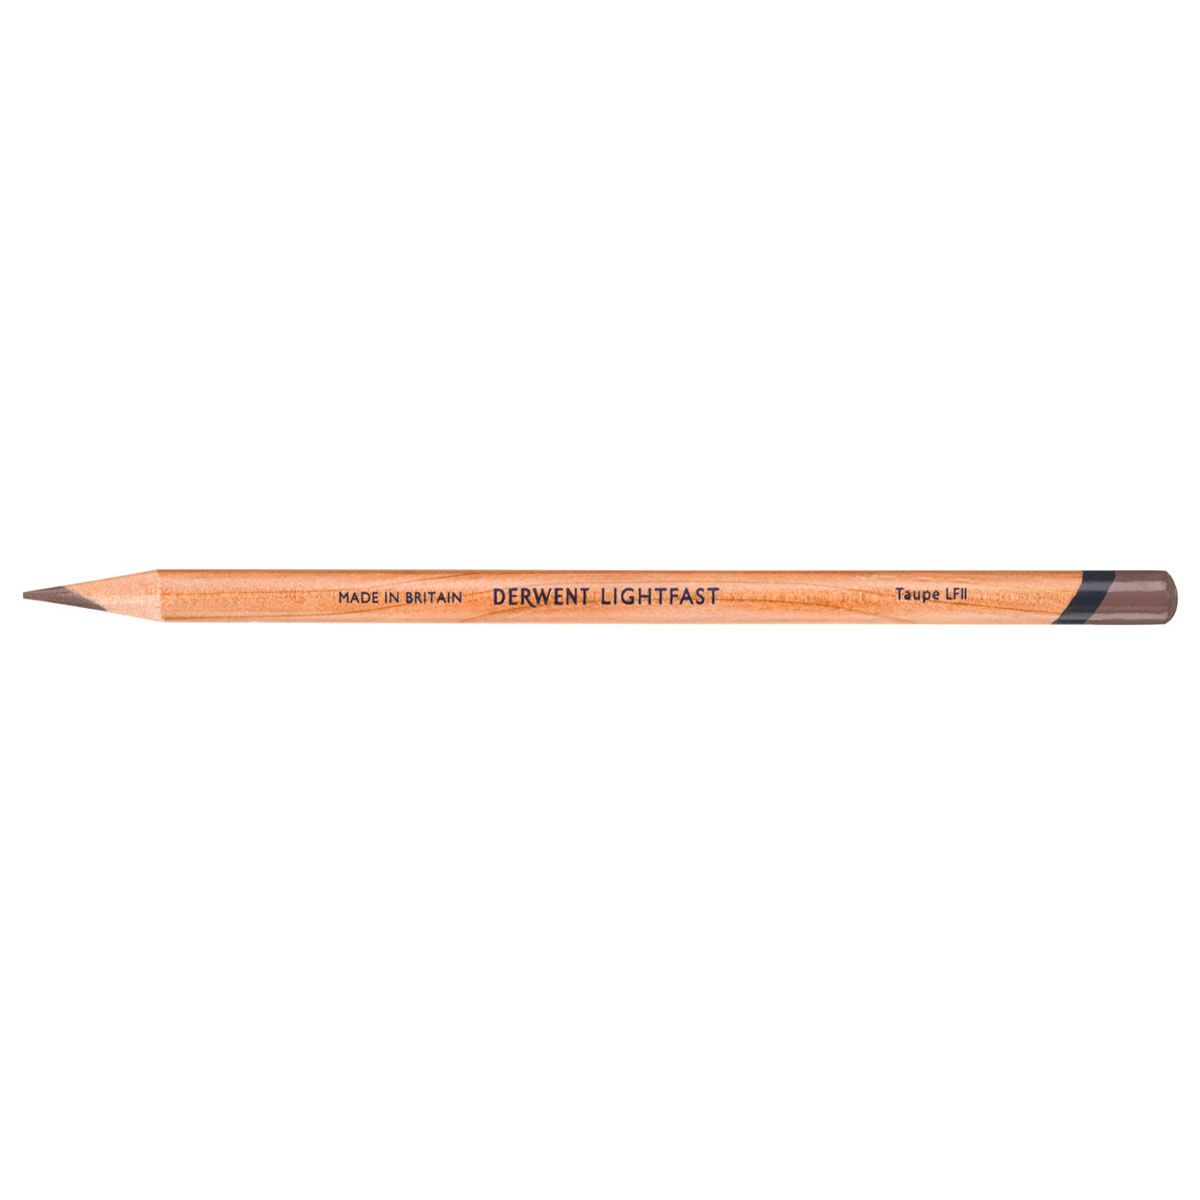 NEW Derwent Lightfast Pencil Colour: Taupe